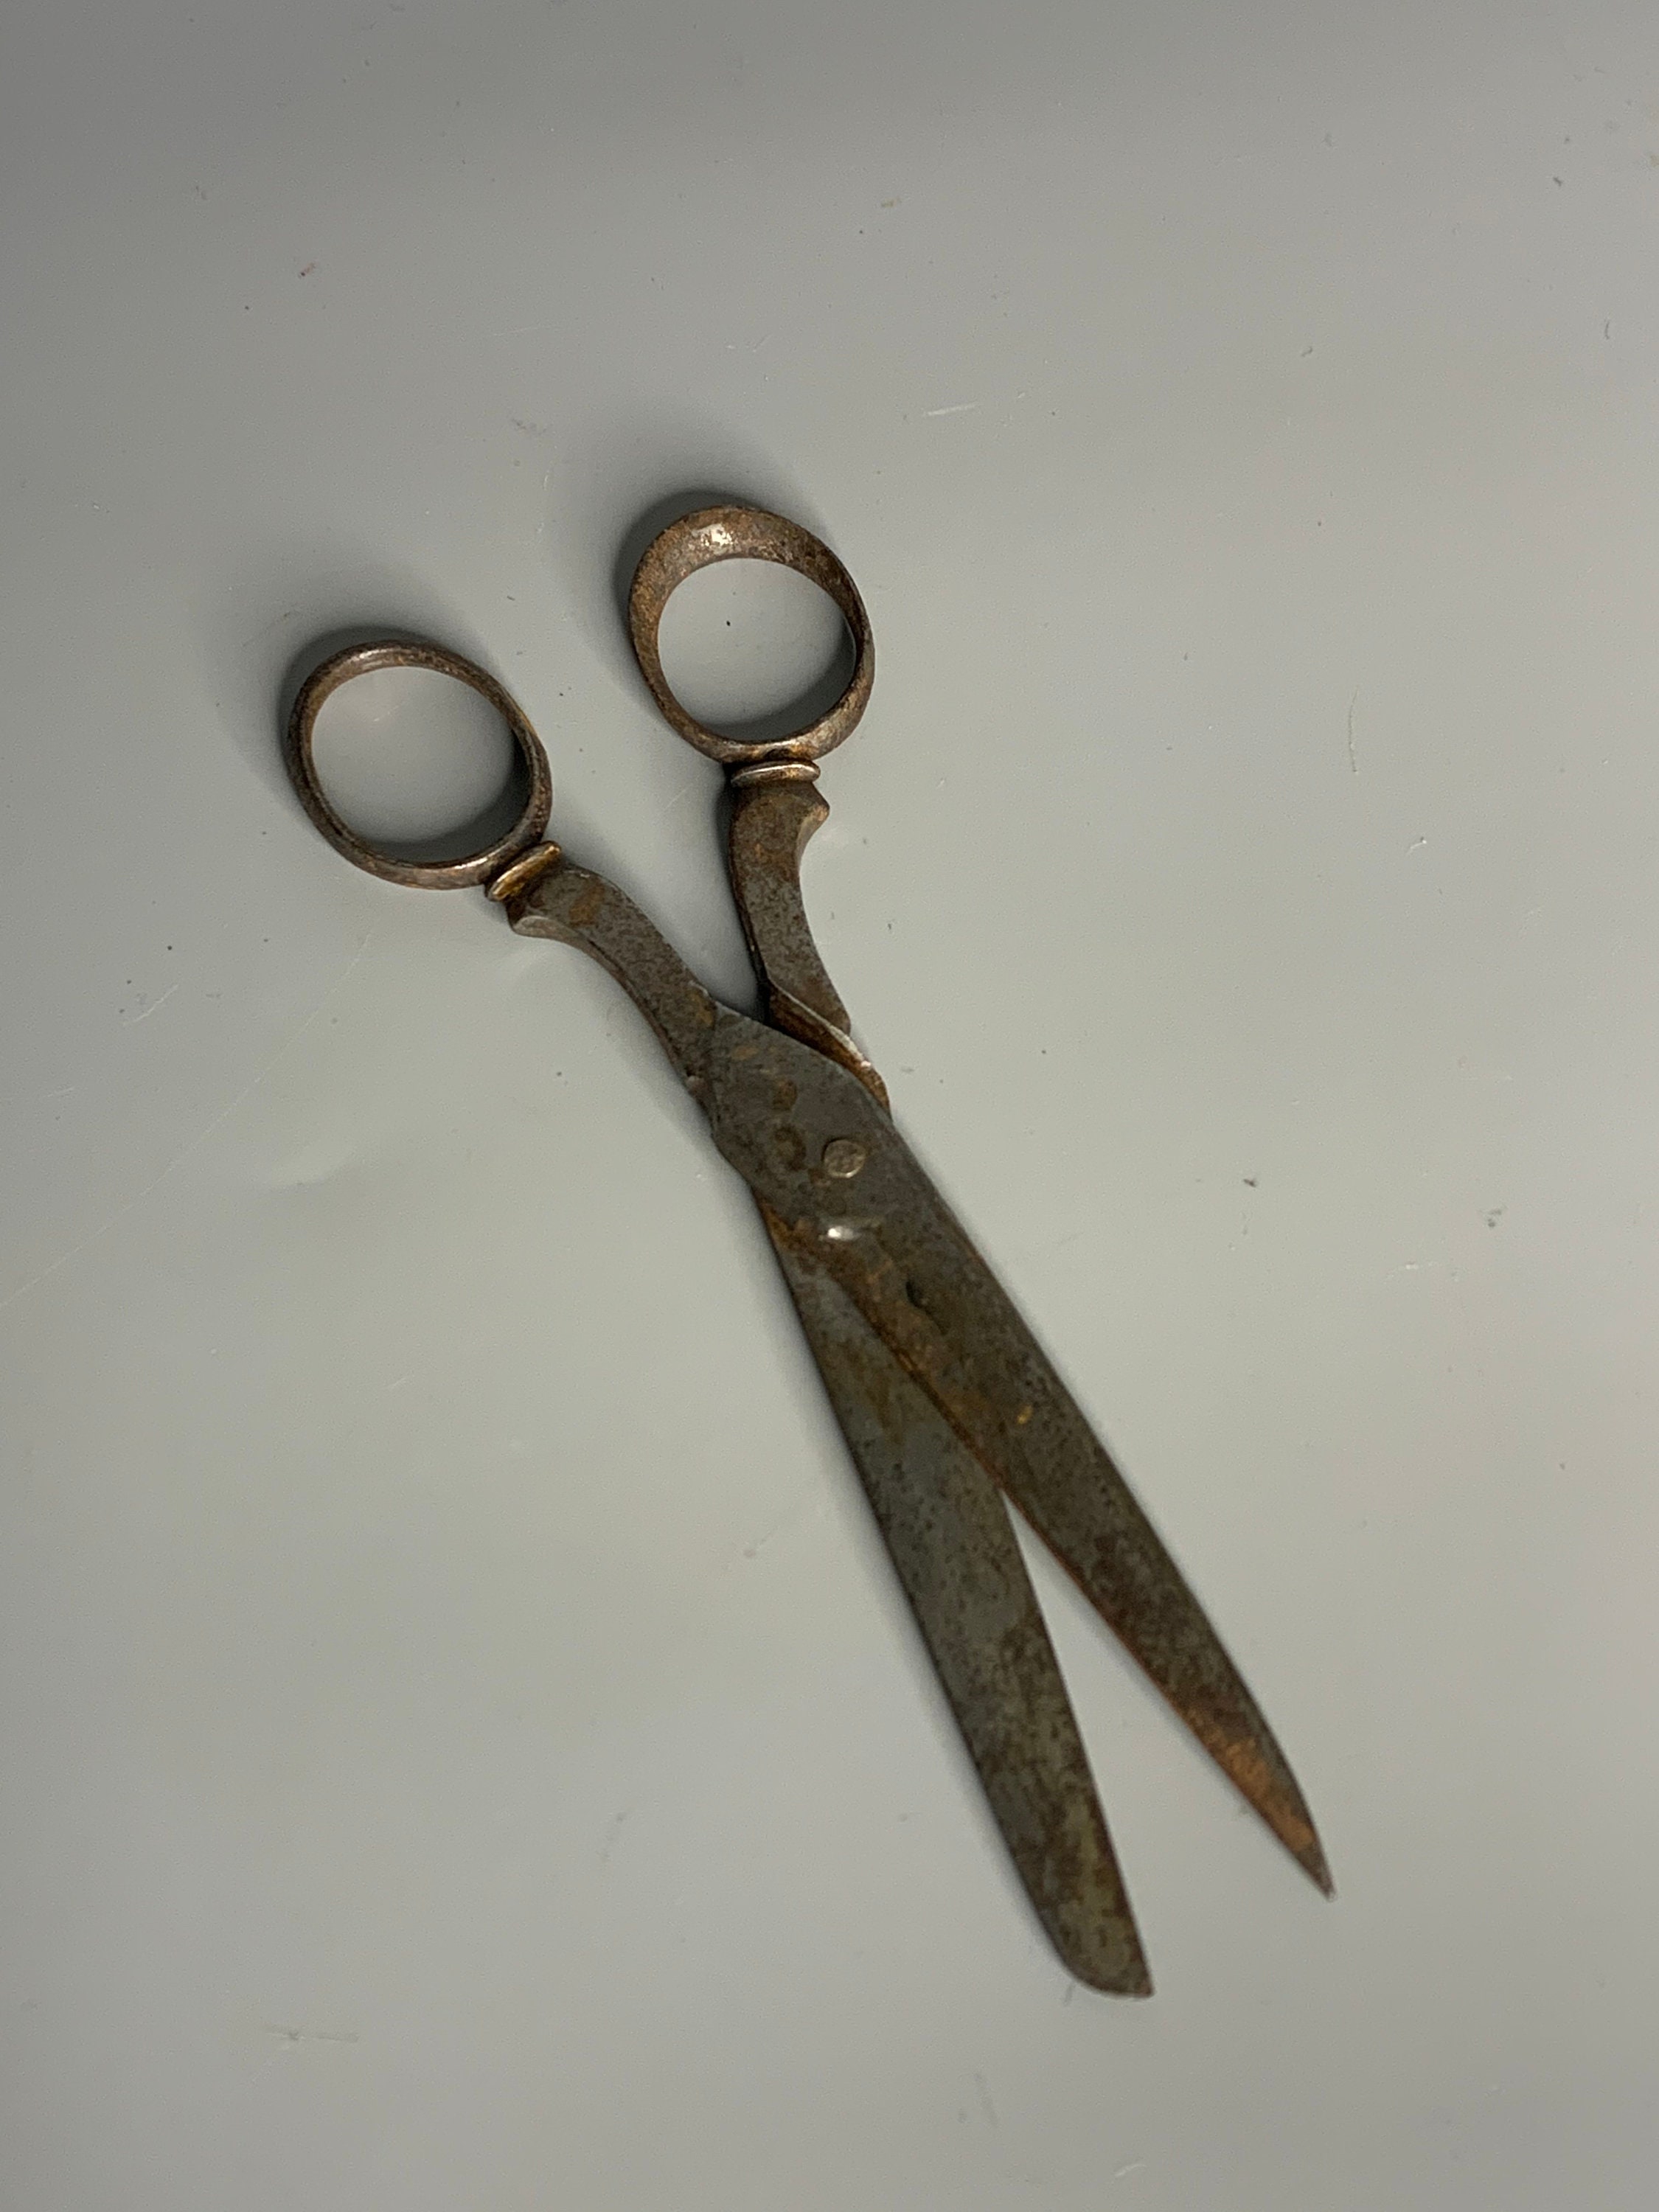 Vintage all metal scissors. by Marko Klarić. Photo stock - StudioNow